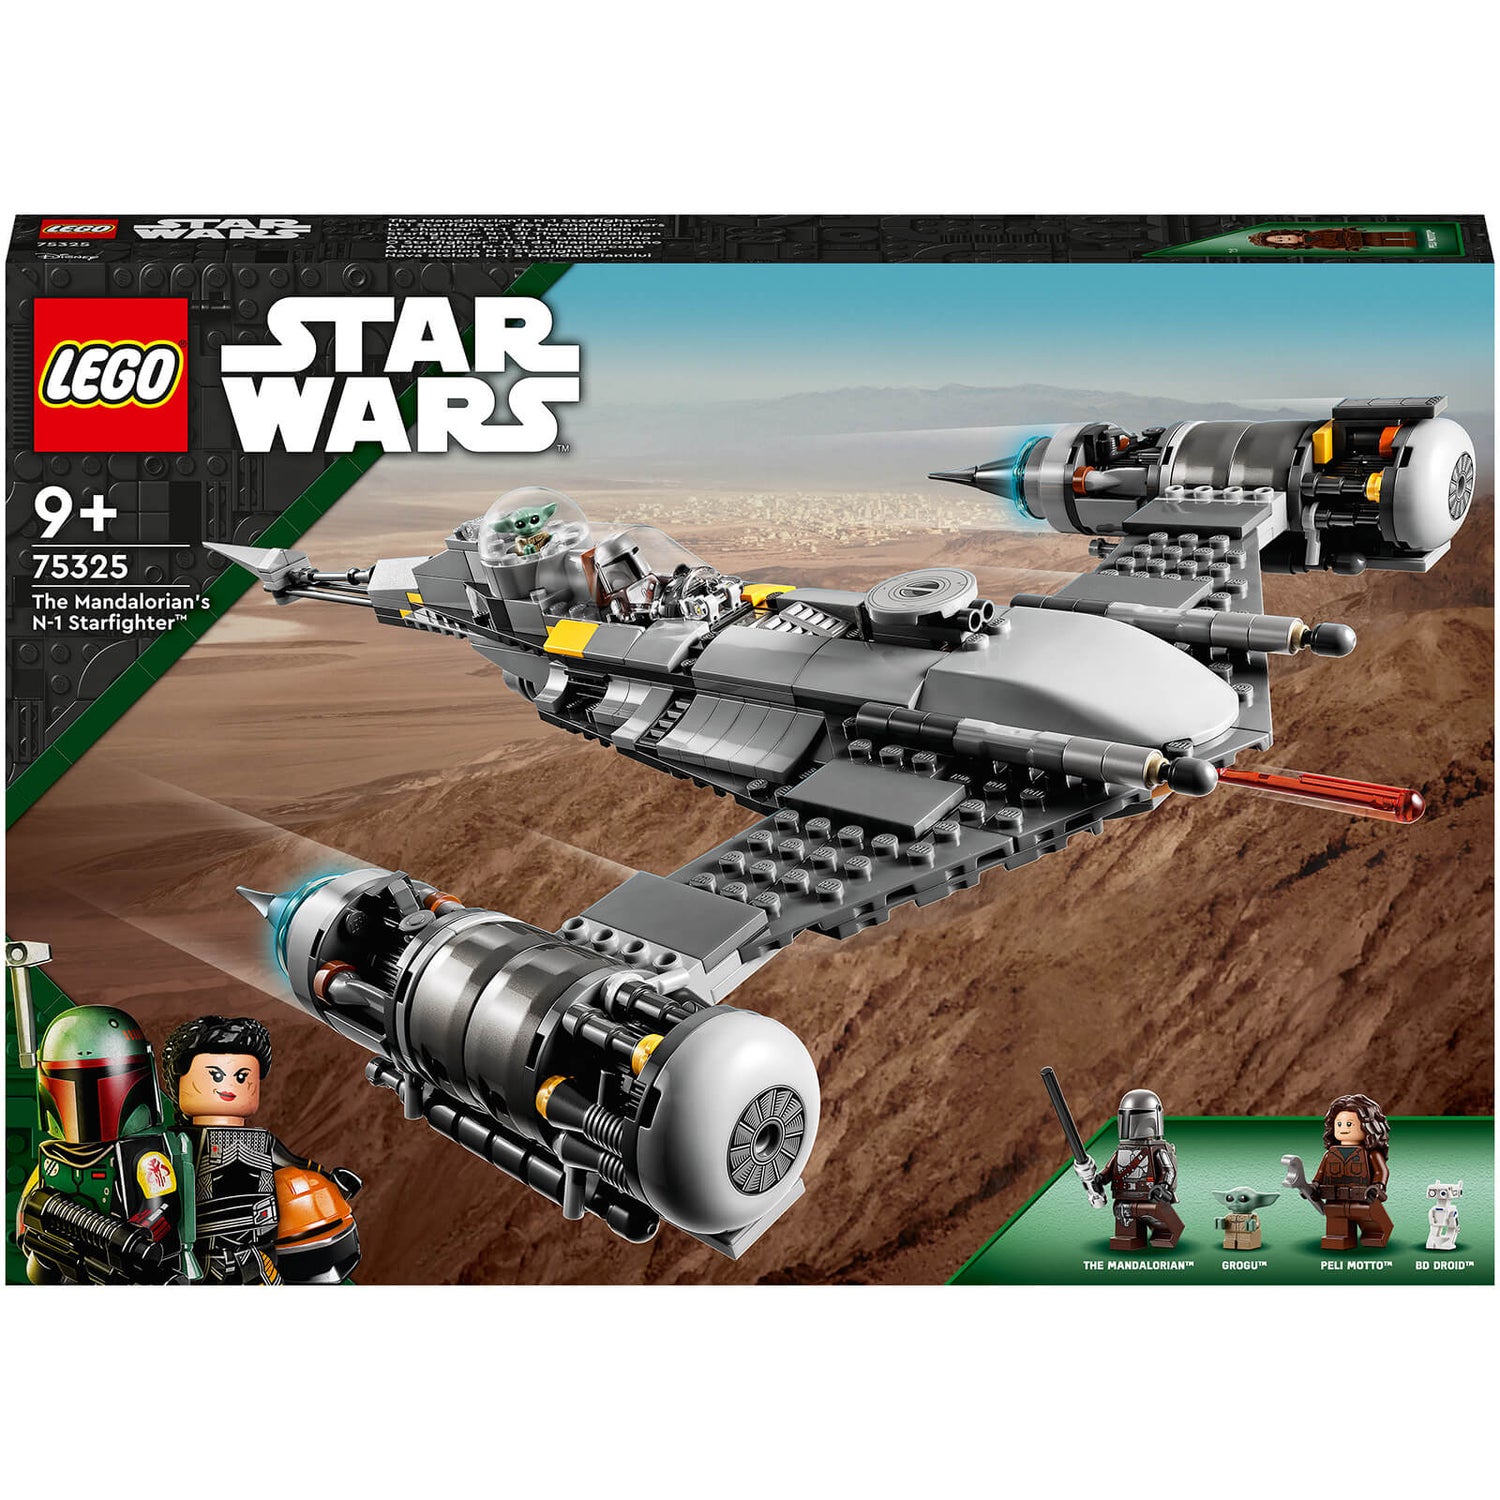 LEGO Star Wars: The Mandalorian's N-1 Starfighter Set (75325)